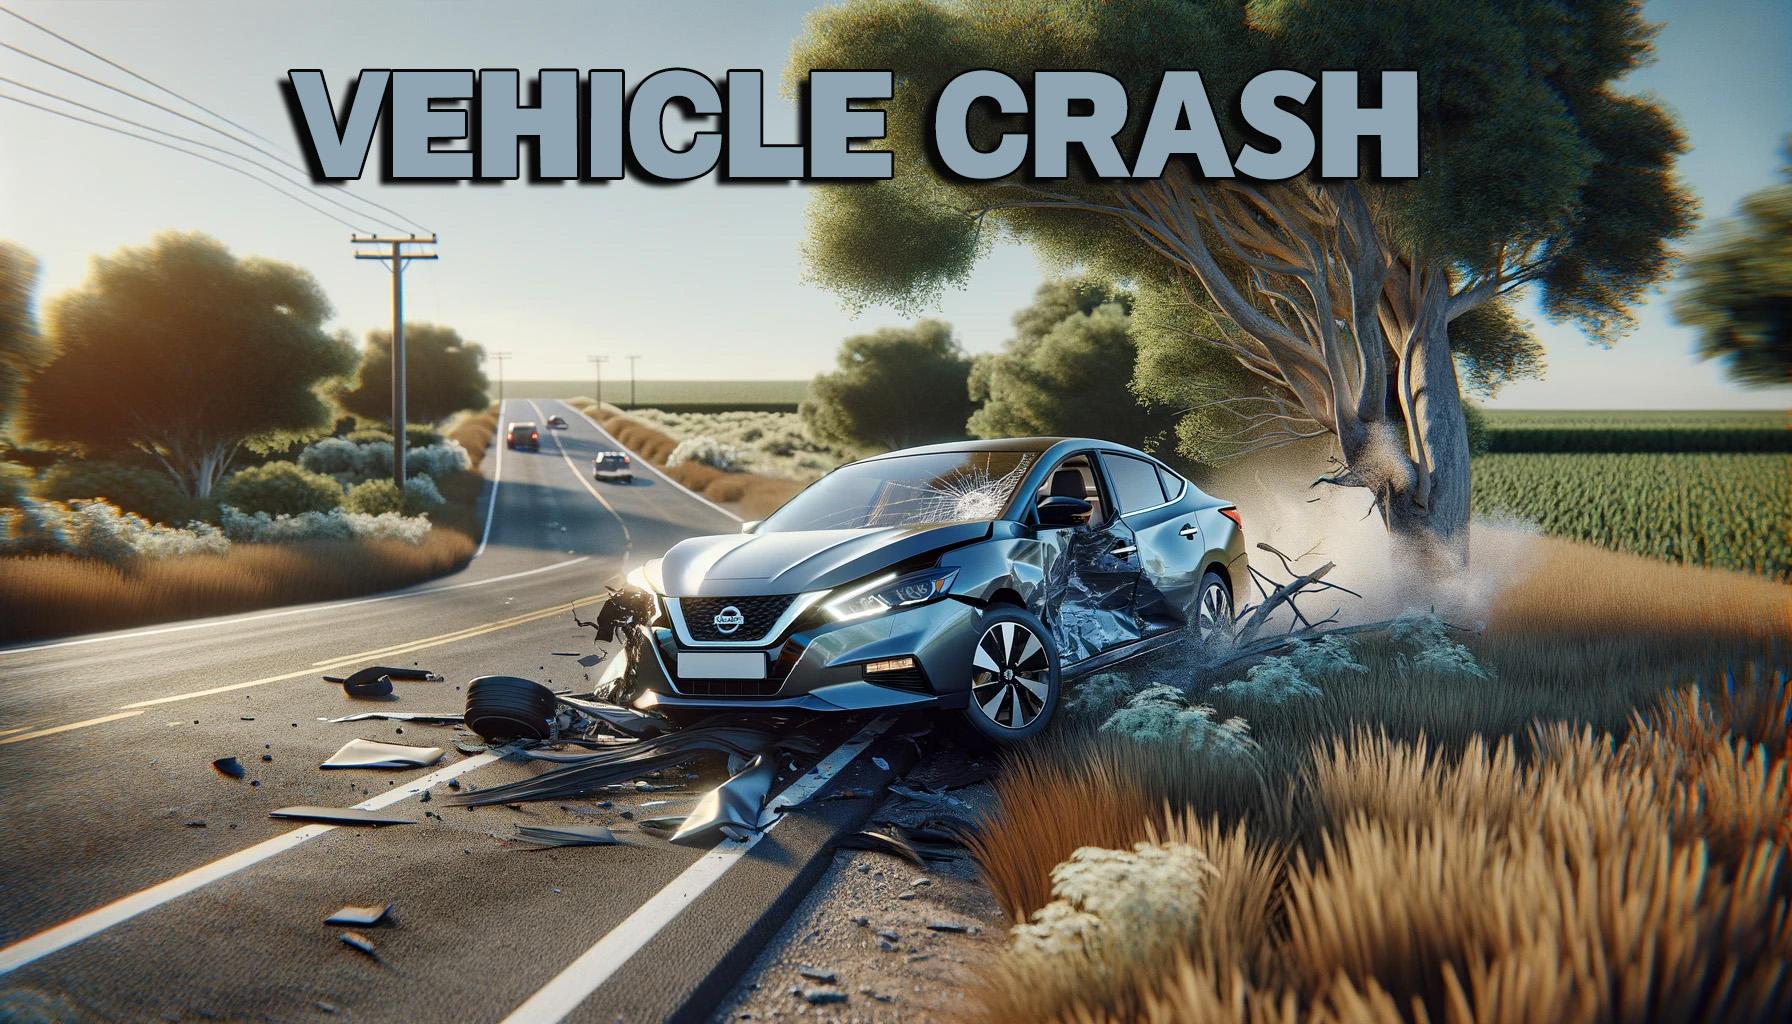 Nissan Sentra accident or crash news graphic